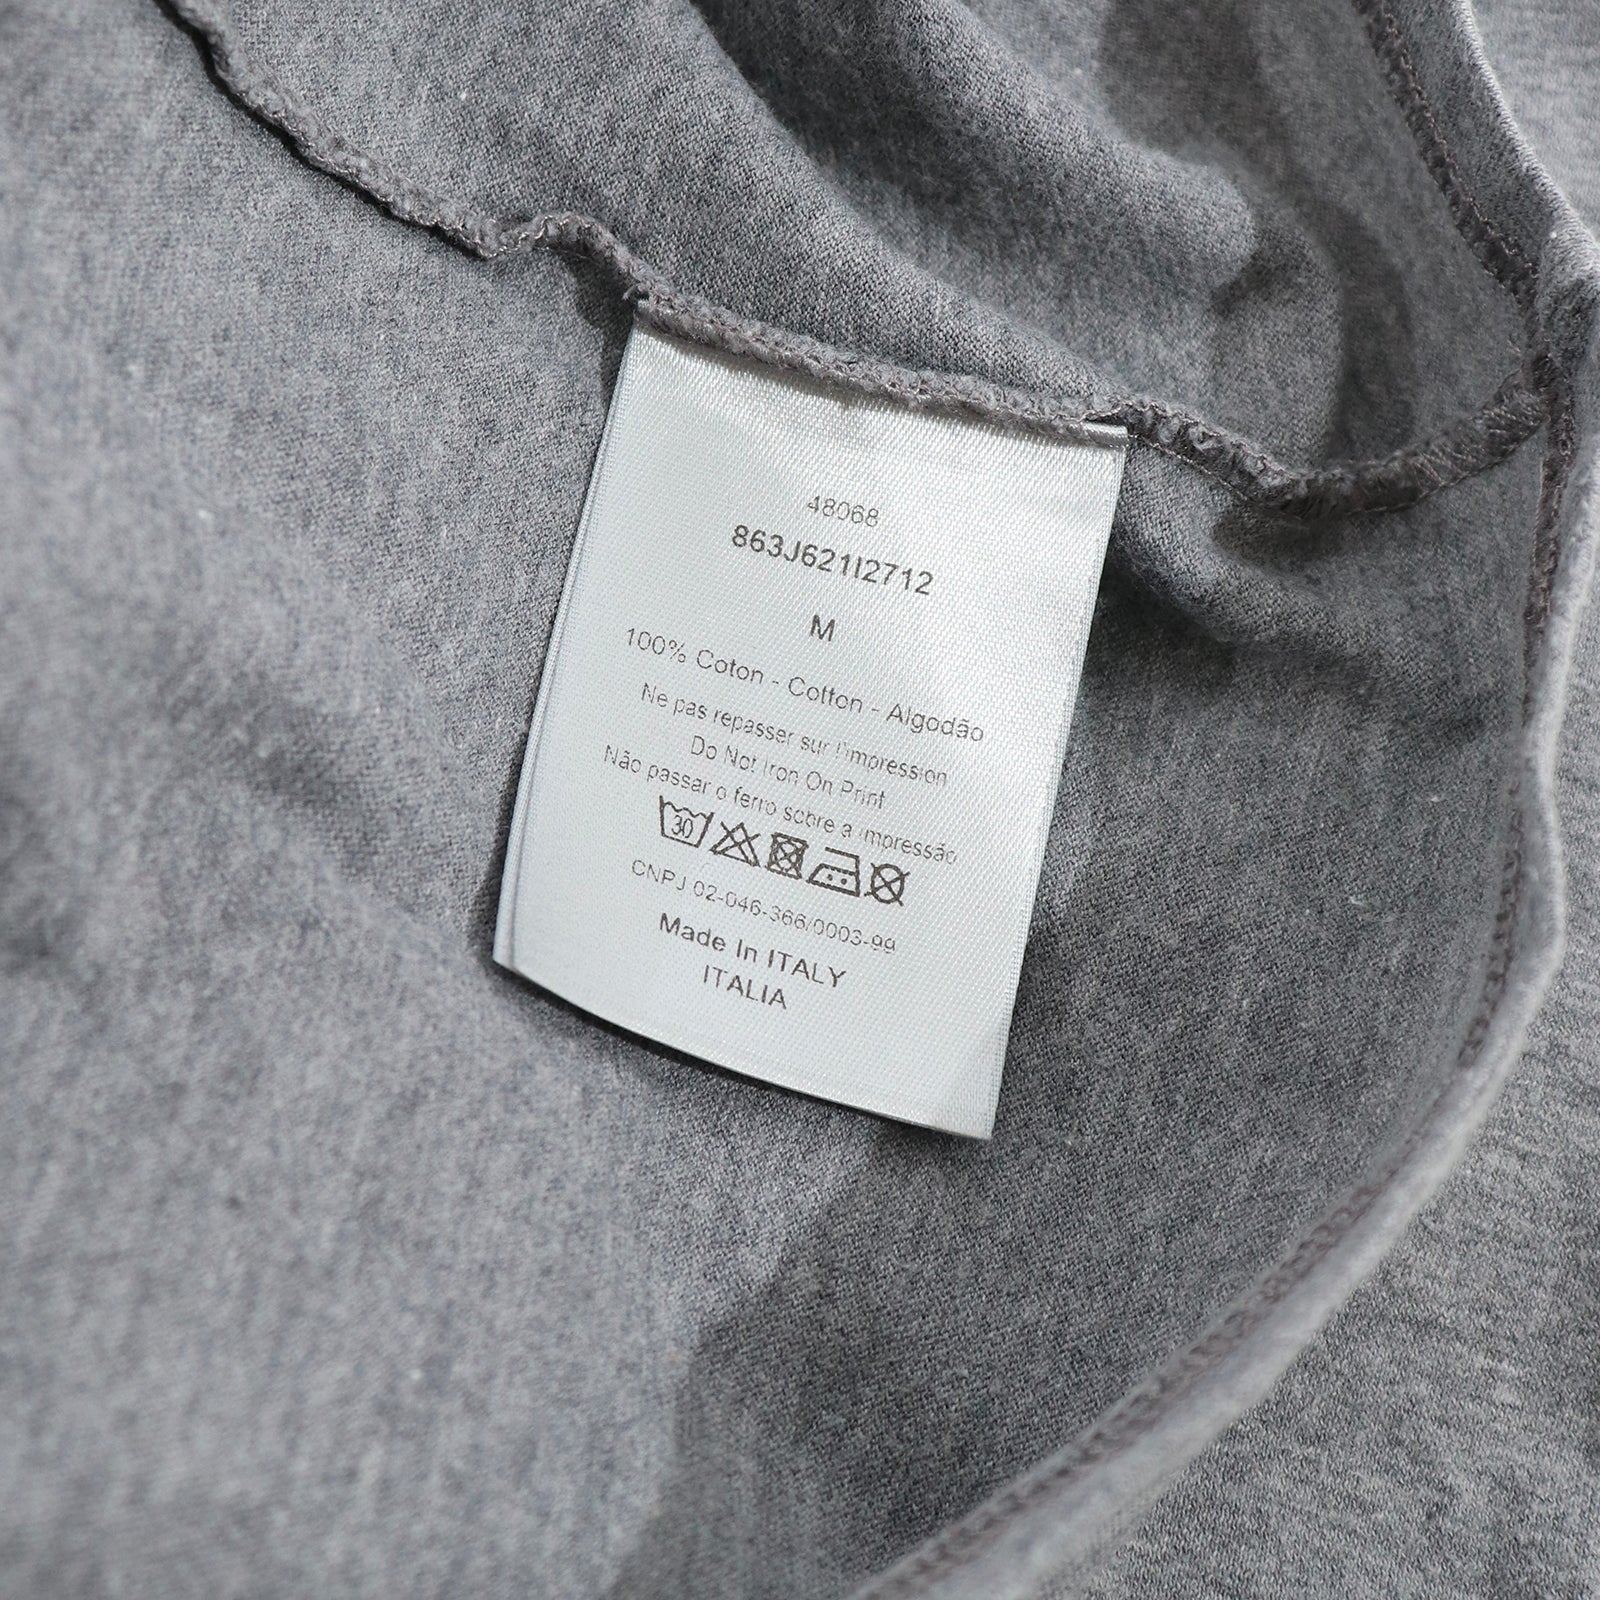 DIOR - Tee-shirt Atelier gris (M)